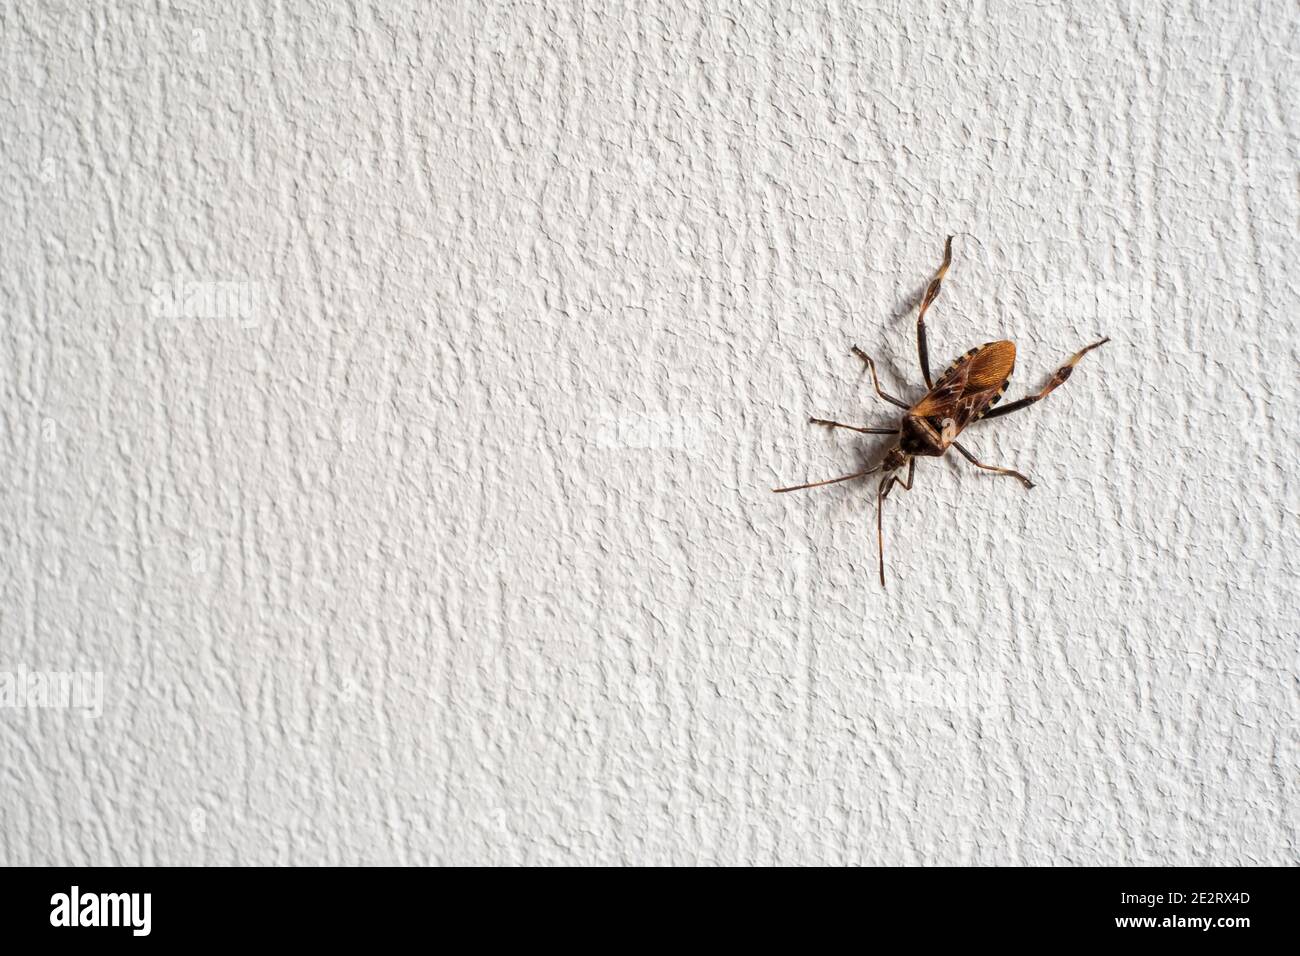 Bug crawling on rough wall Stock Photo - Alamy